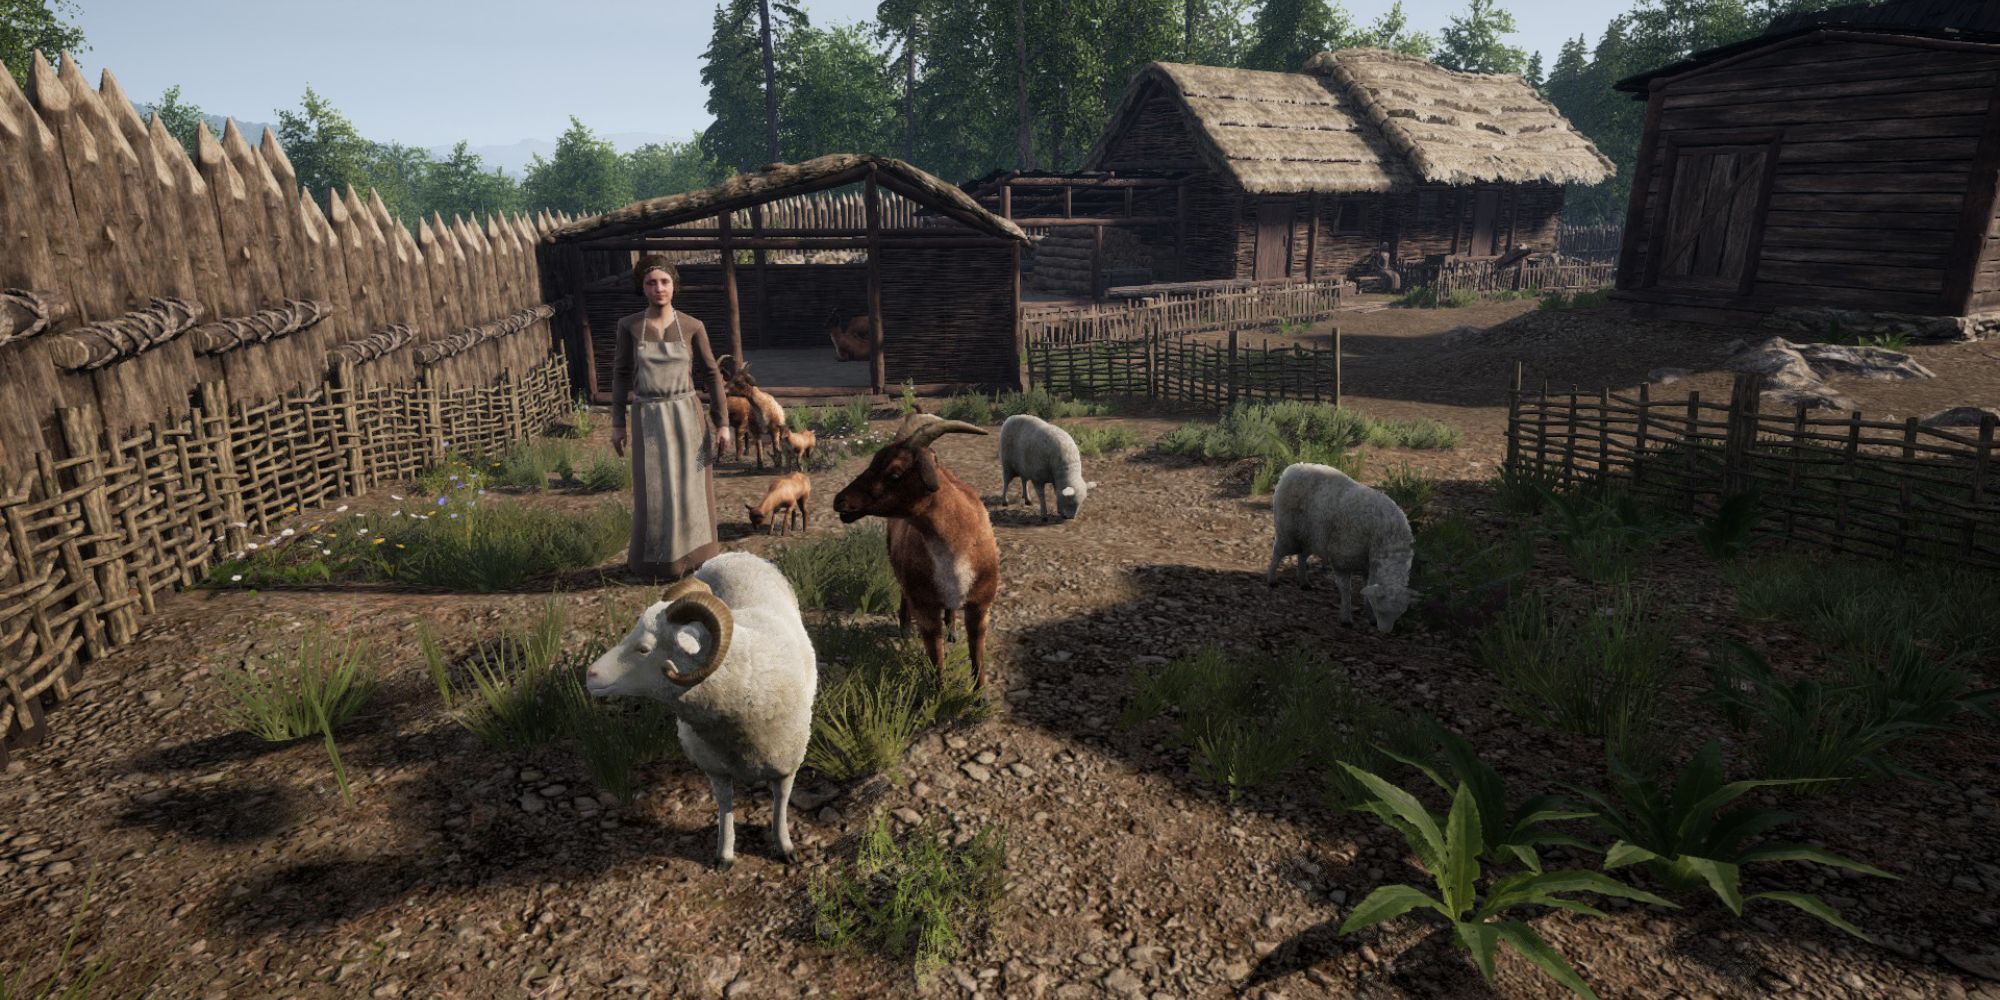 Medieval dynasty animals roaming the farm